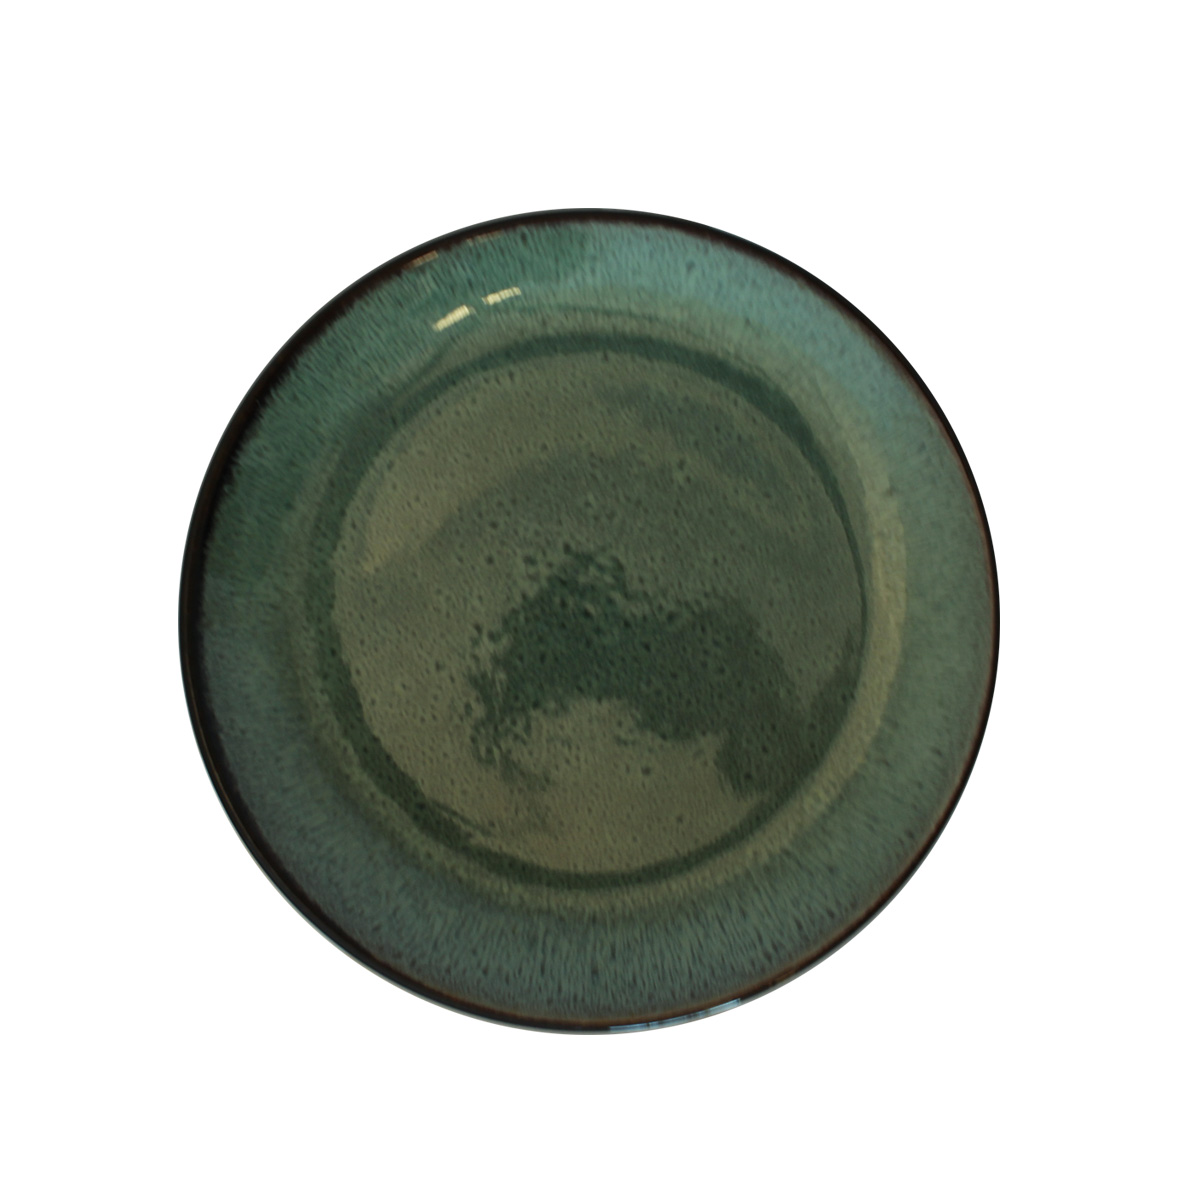 Keramički tanjir zelene boje MUS-088  -21cm 